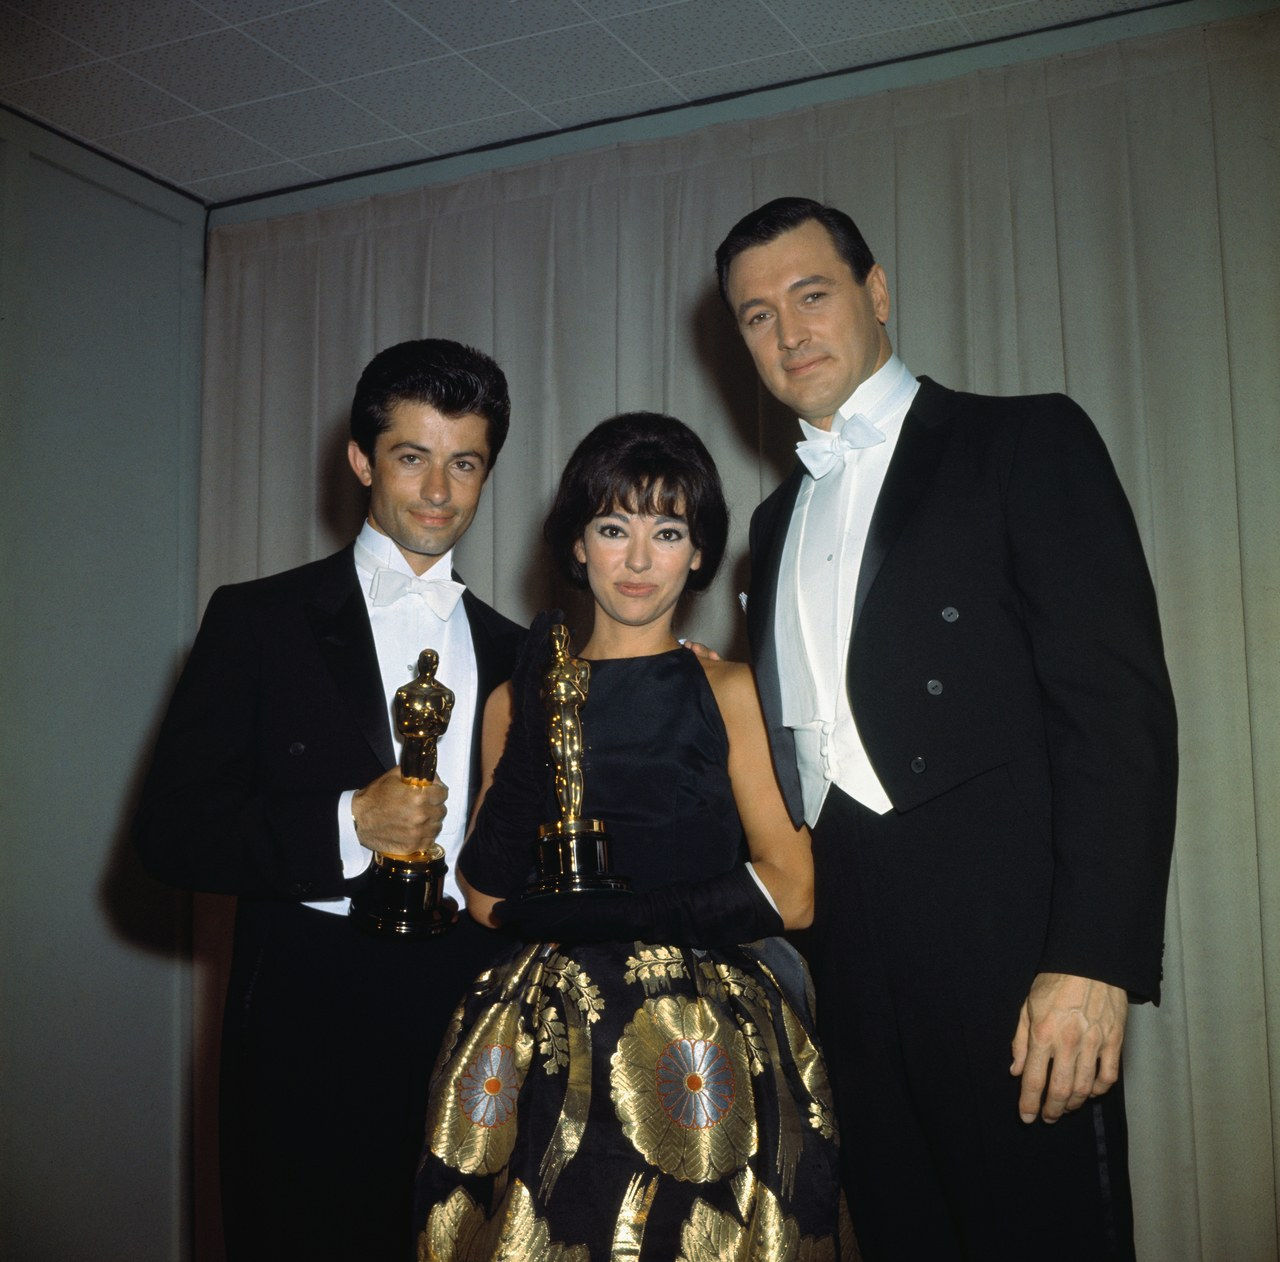 Oscar Winners George Chakiris and Rita Moreno with Rock Hudson